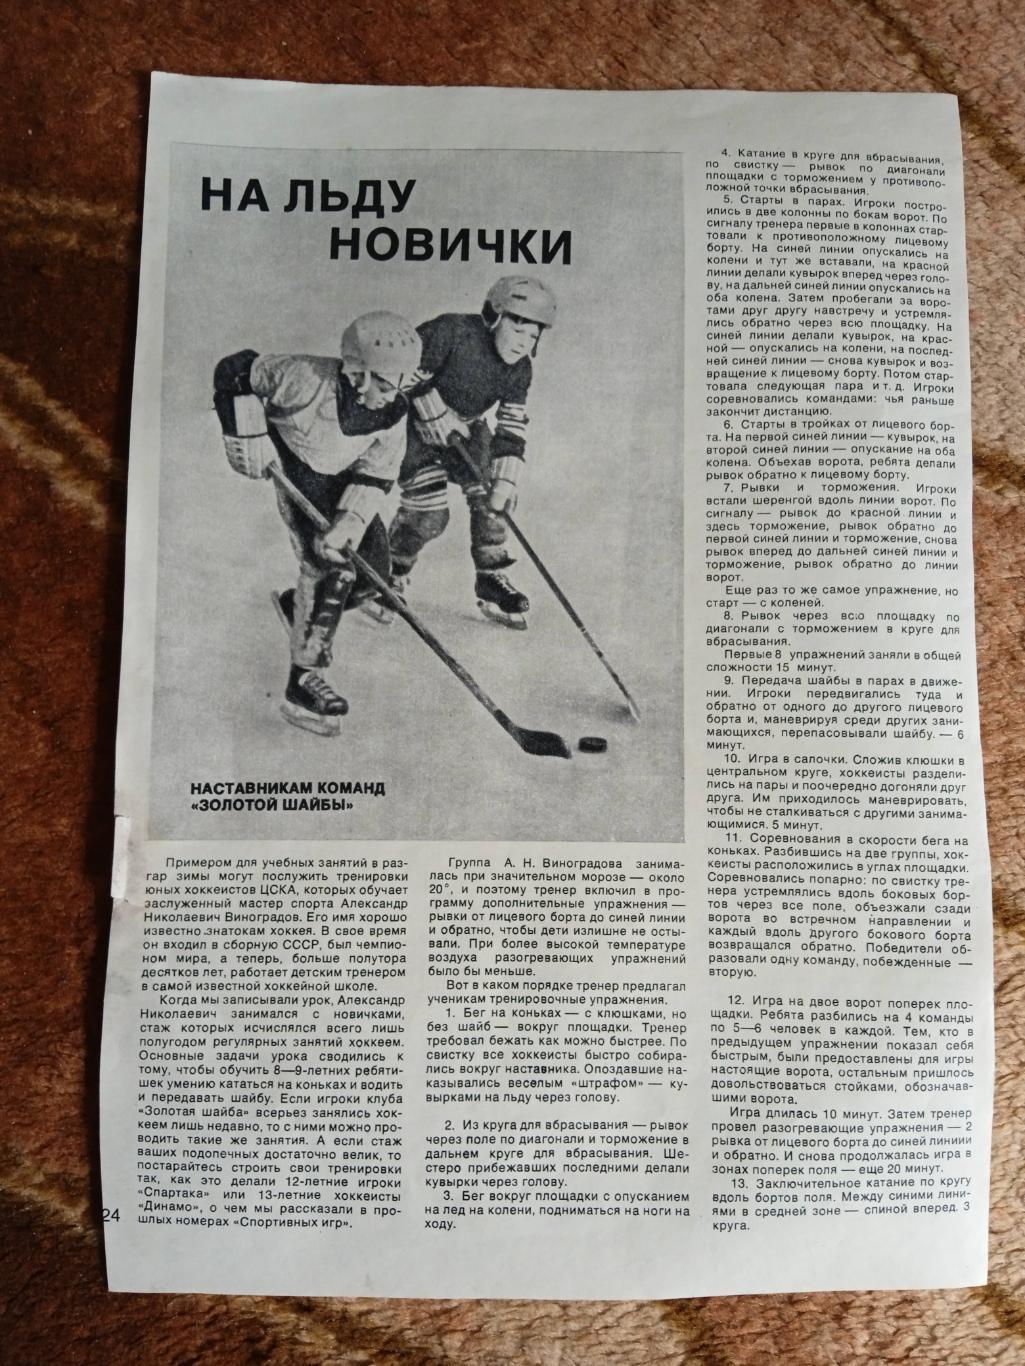 Статья.Фото.Хоккей.На льду новички.СИ 1978.